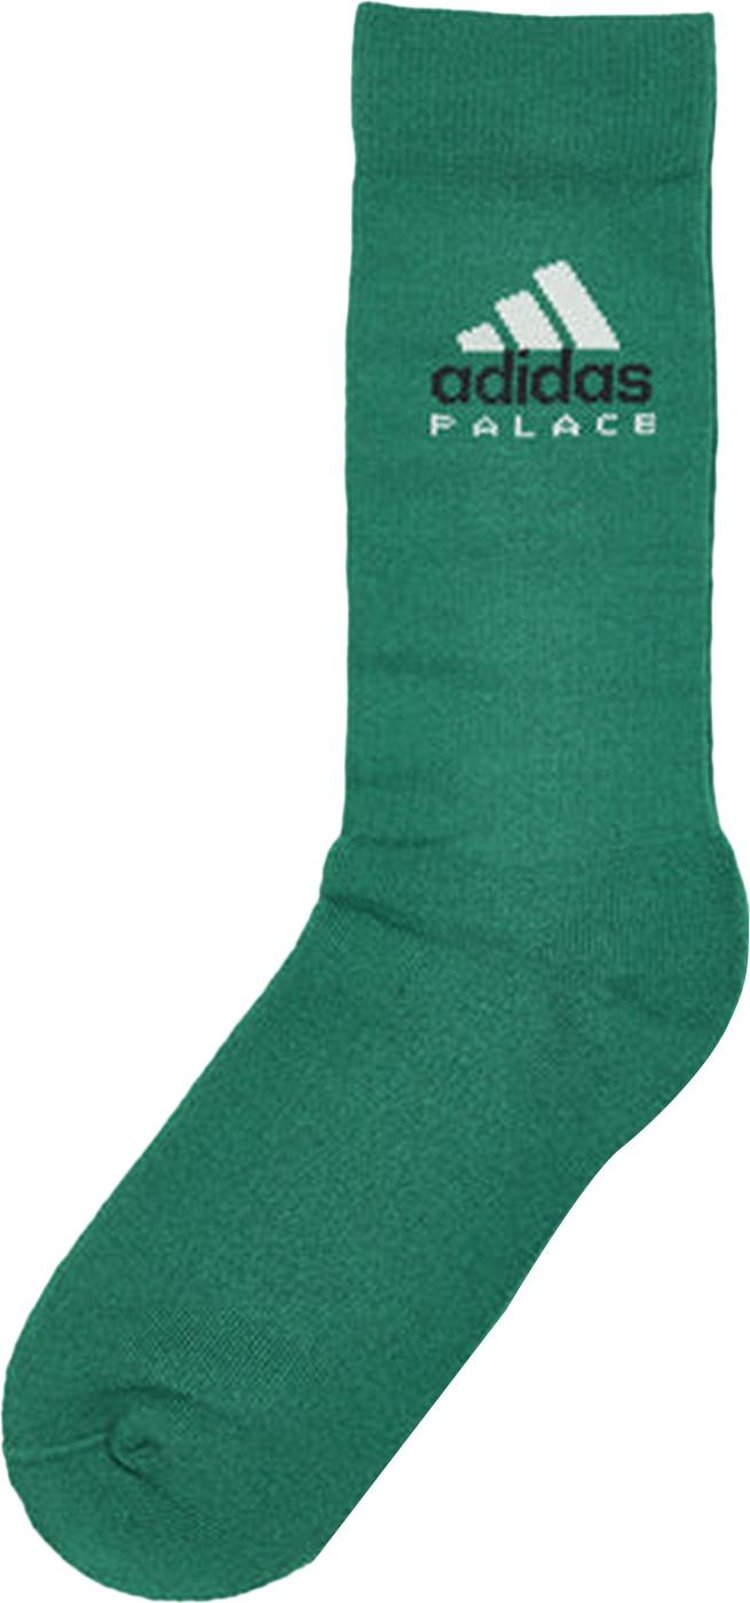 Palace x adidas EQT Sock 'Green'